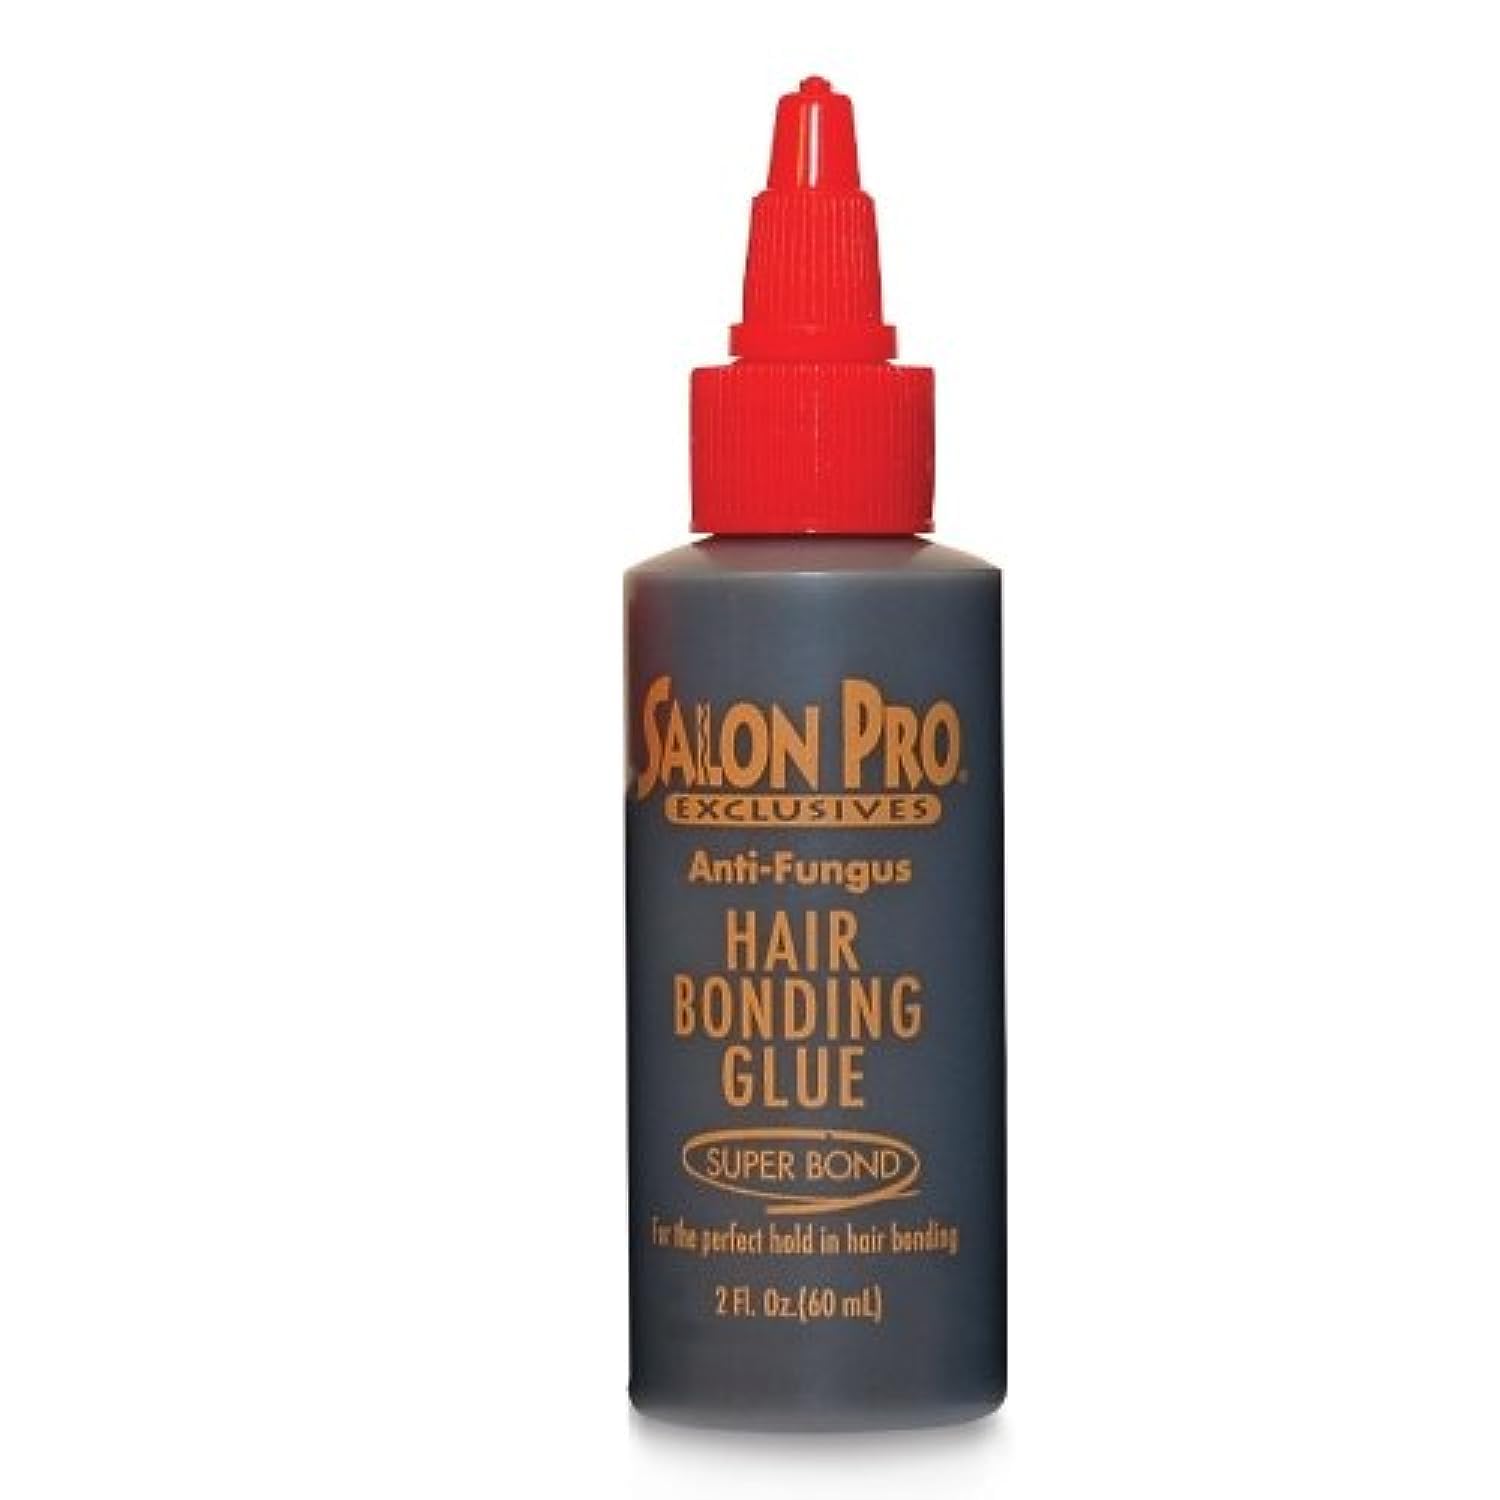 Universal Beauty Salon Pro Exclusive Anti Fungus Hair Bonding Glue - Super Bond